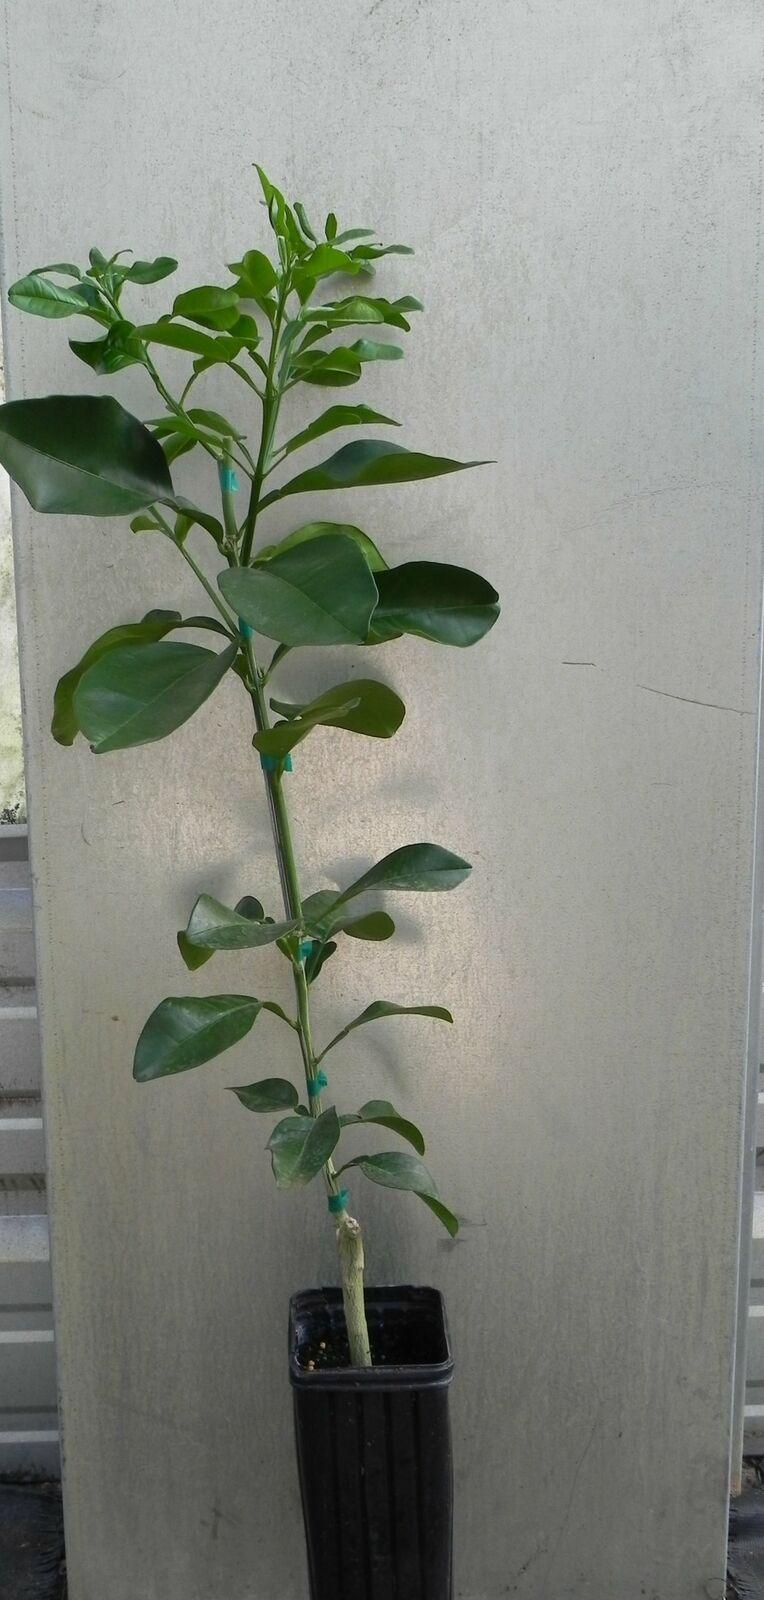 Dwarf Hirado Pink Pummelo Tree - 26-30" Tall - Live Citrus Plant - 1 Gallon Pot - The Nursery Center